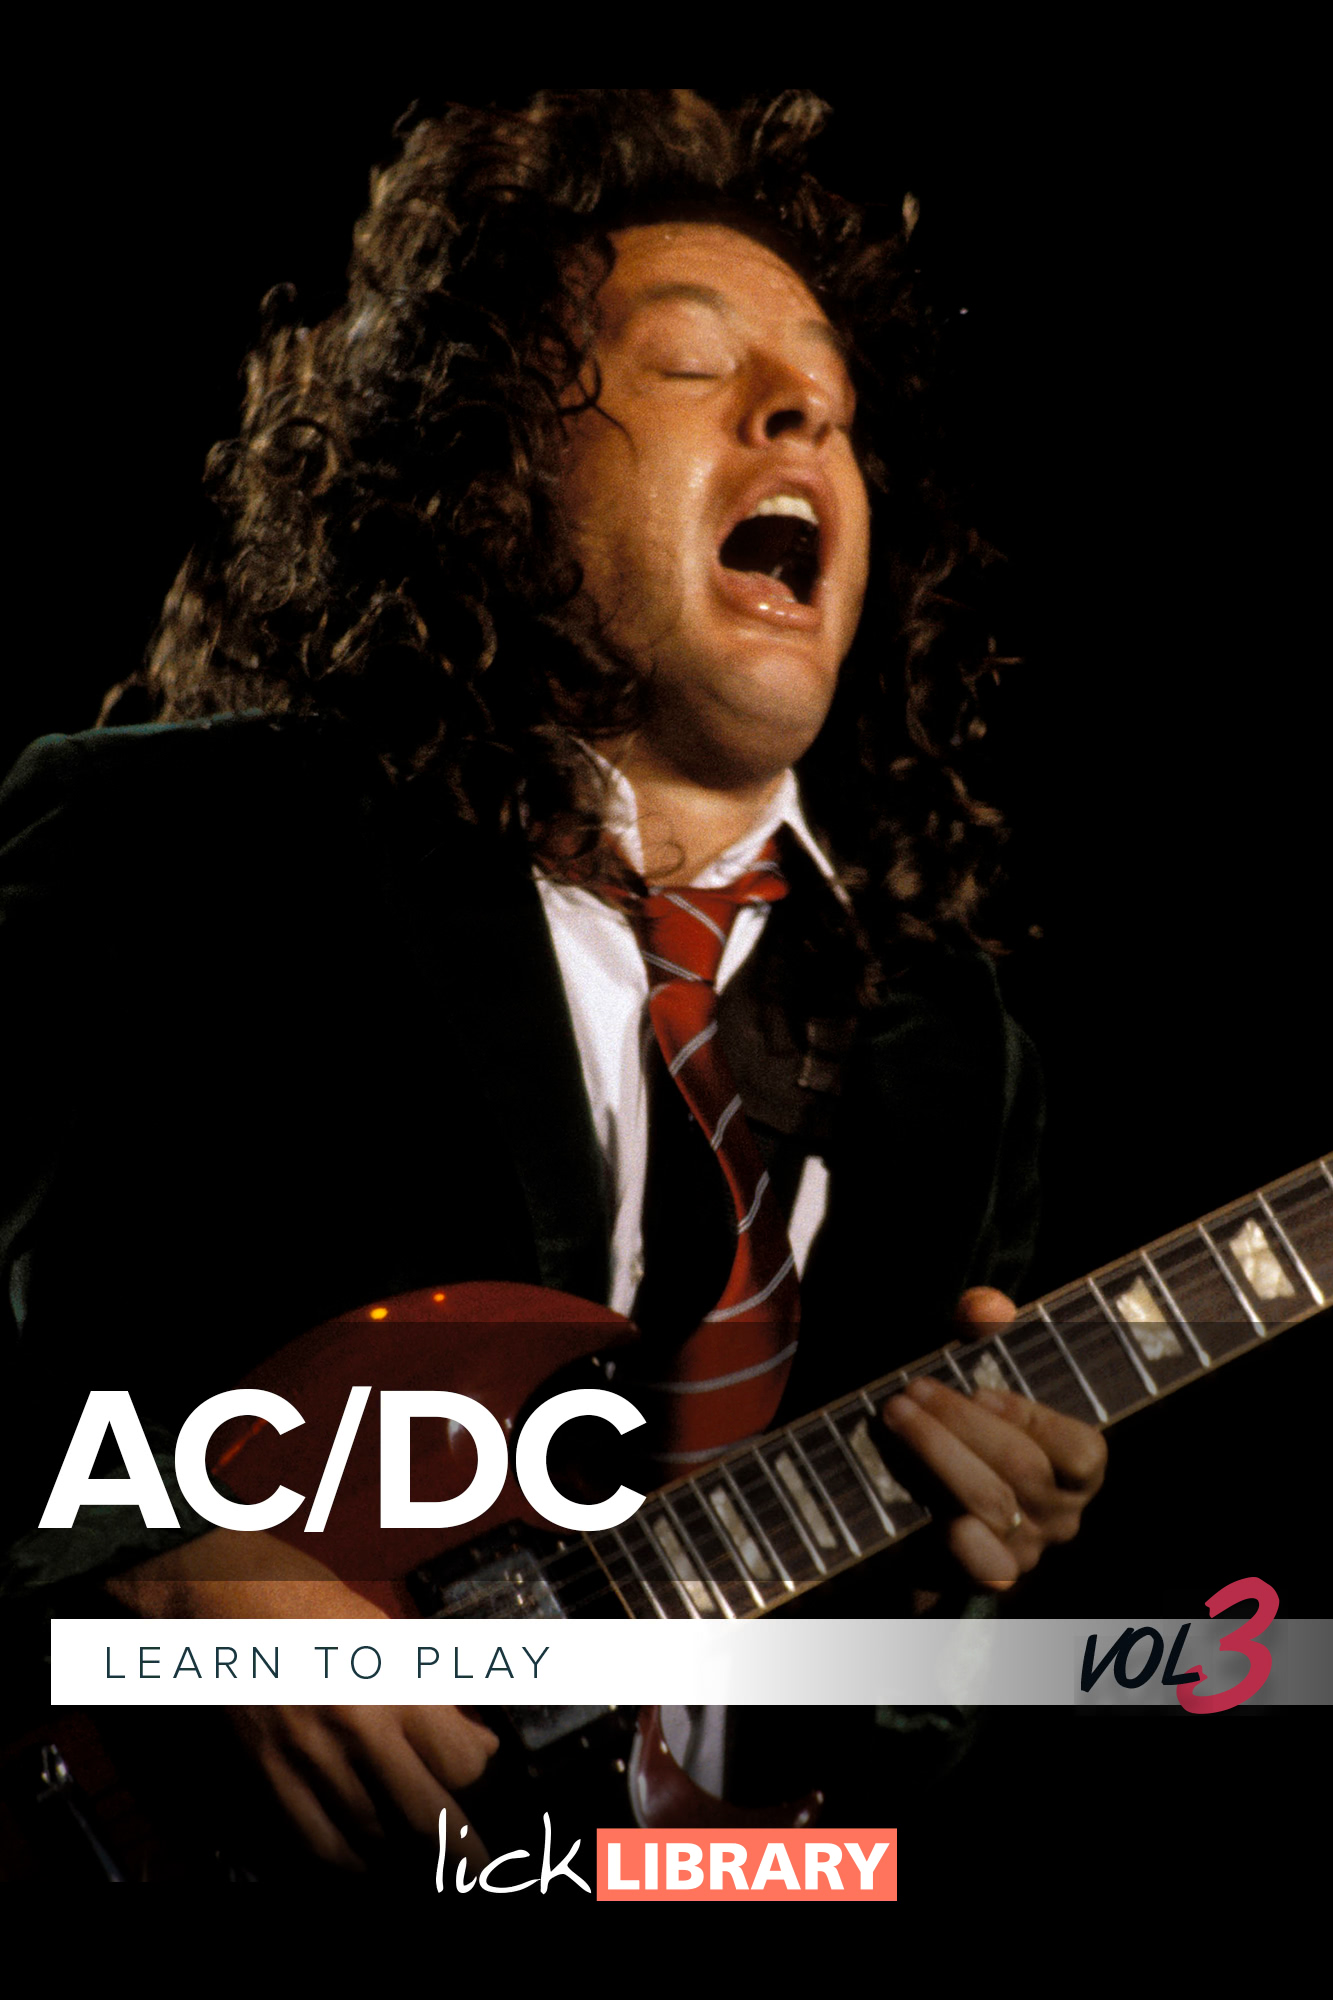 AC/DC Classics: Guitar Play-Along Volume 119 1 cd inclus - Livre CD - AC/DC  - Achat Livre